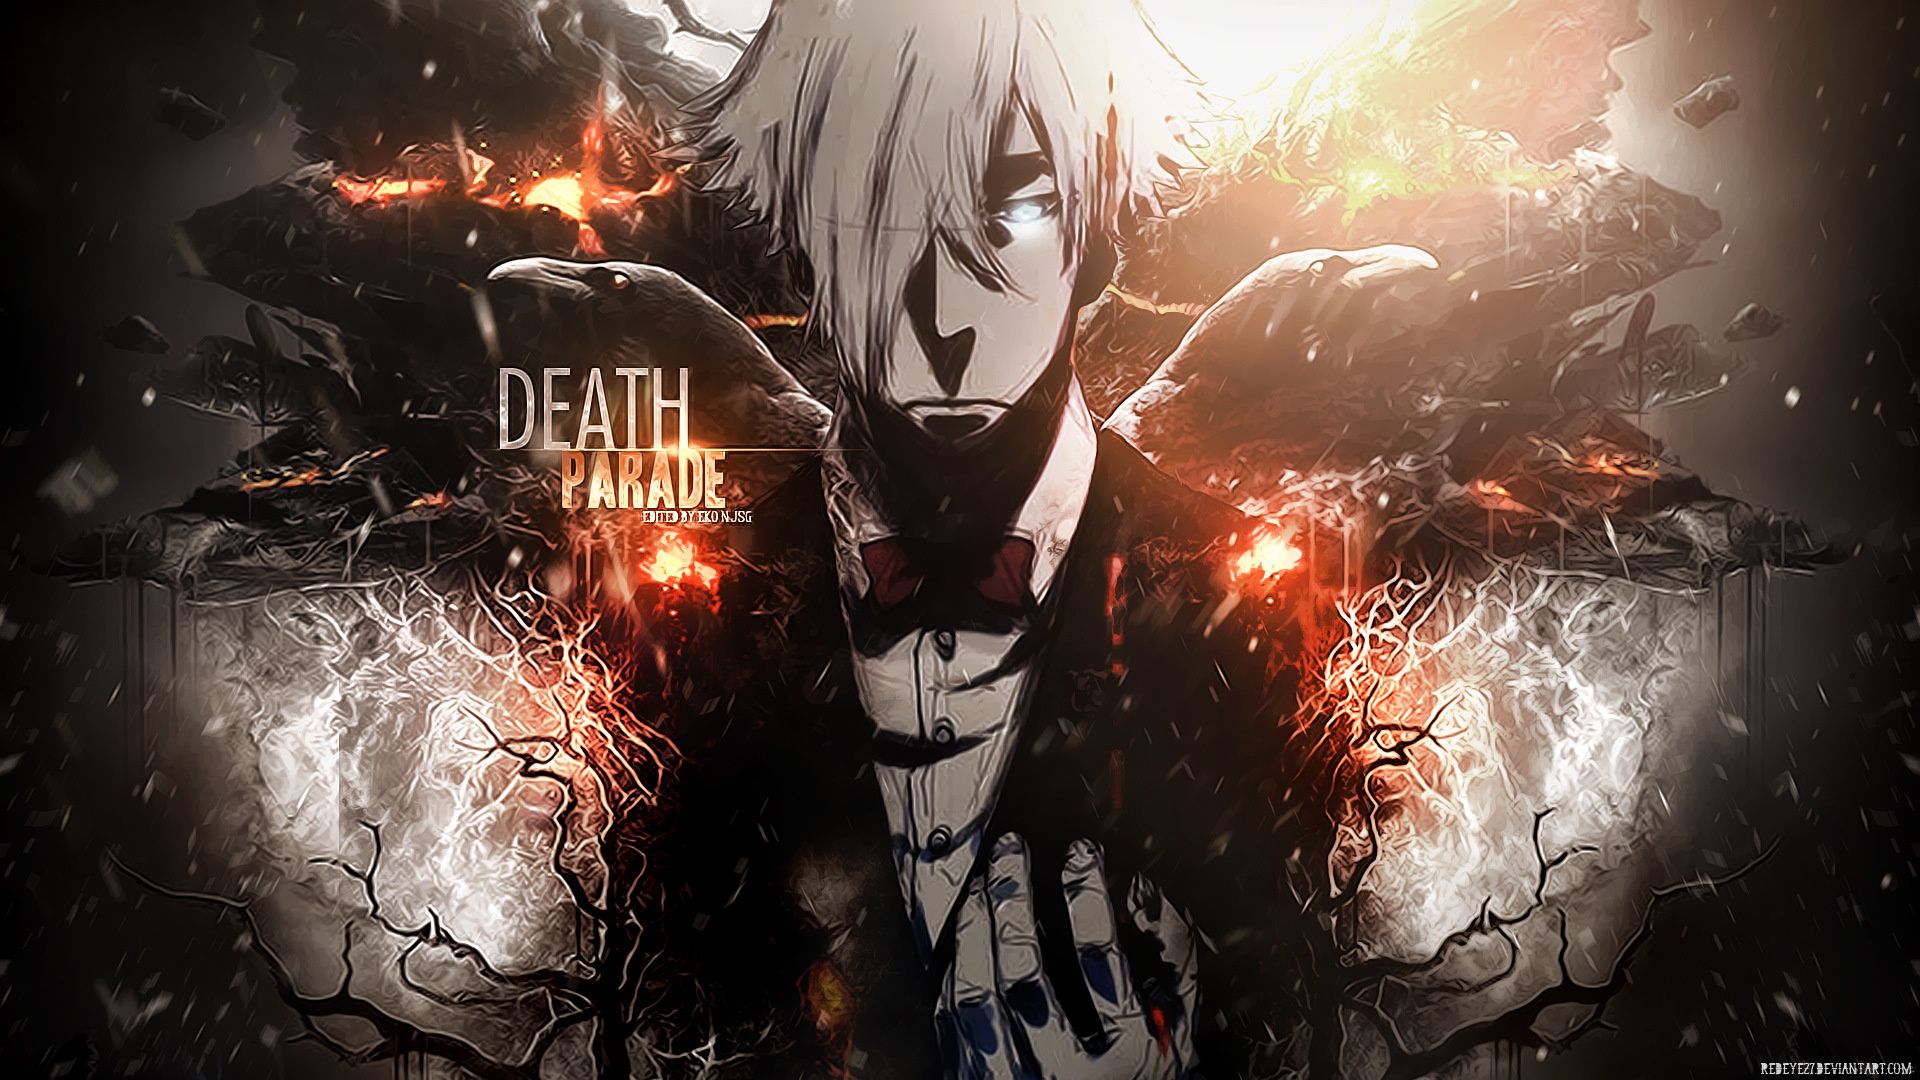 Livre d'images anime et manga - Death Parade - Wattpad